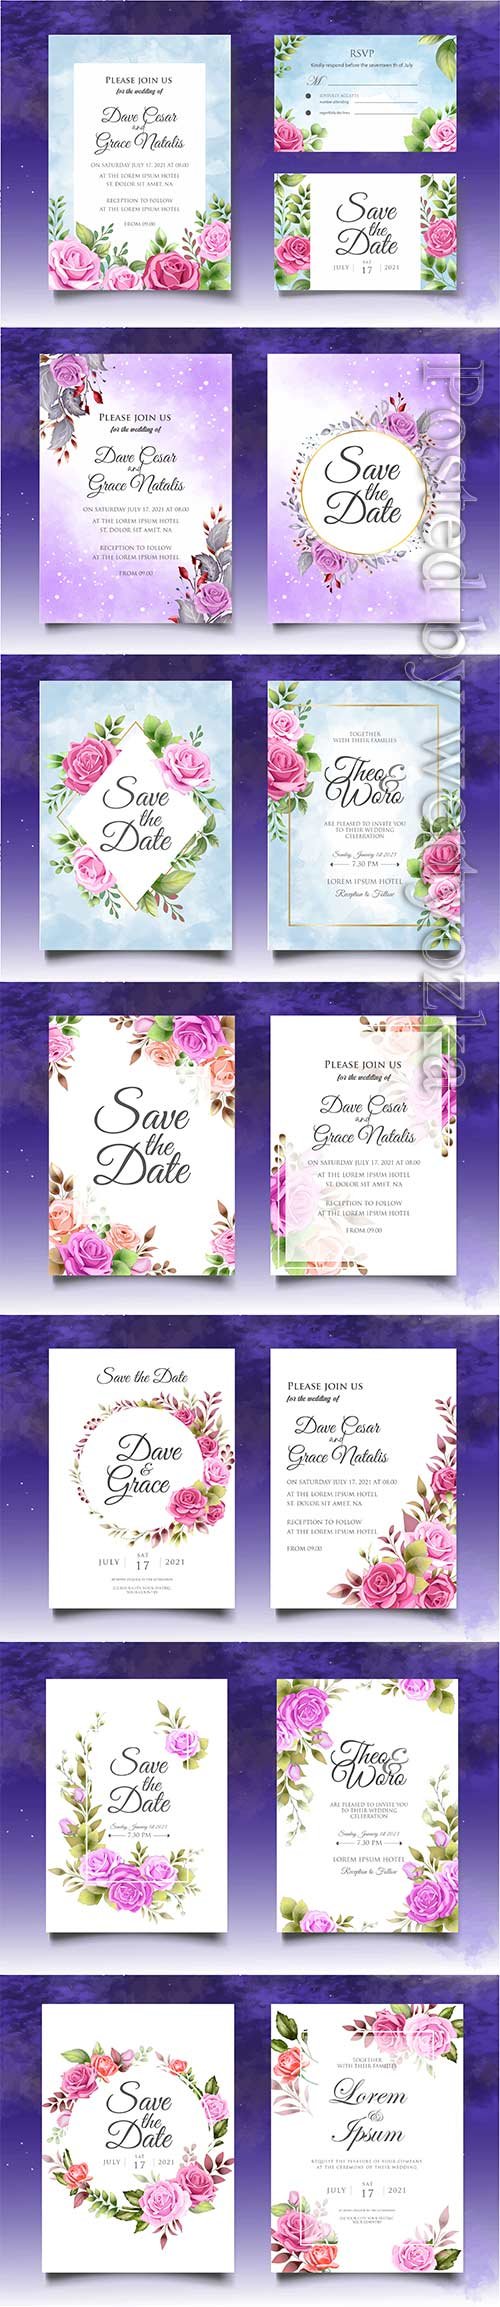 Luxury floral wedding invitation vector template